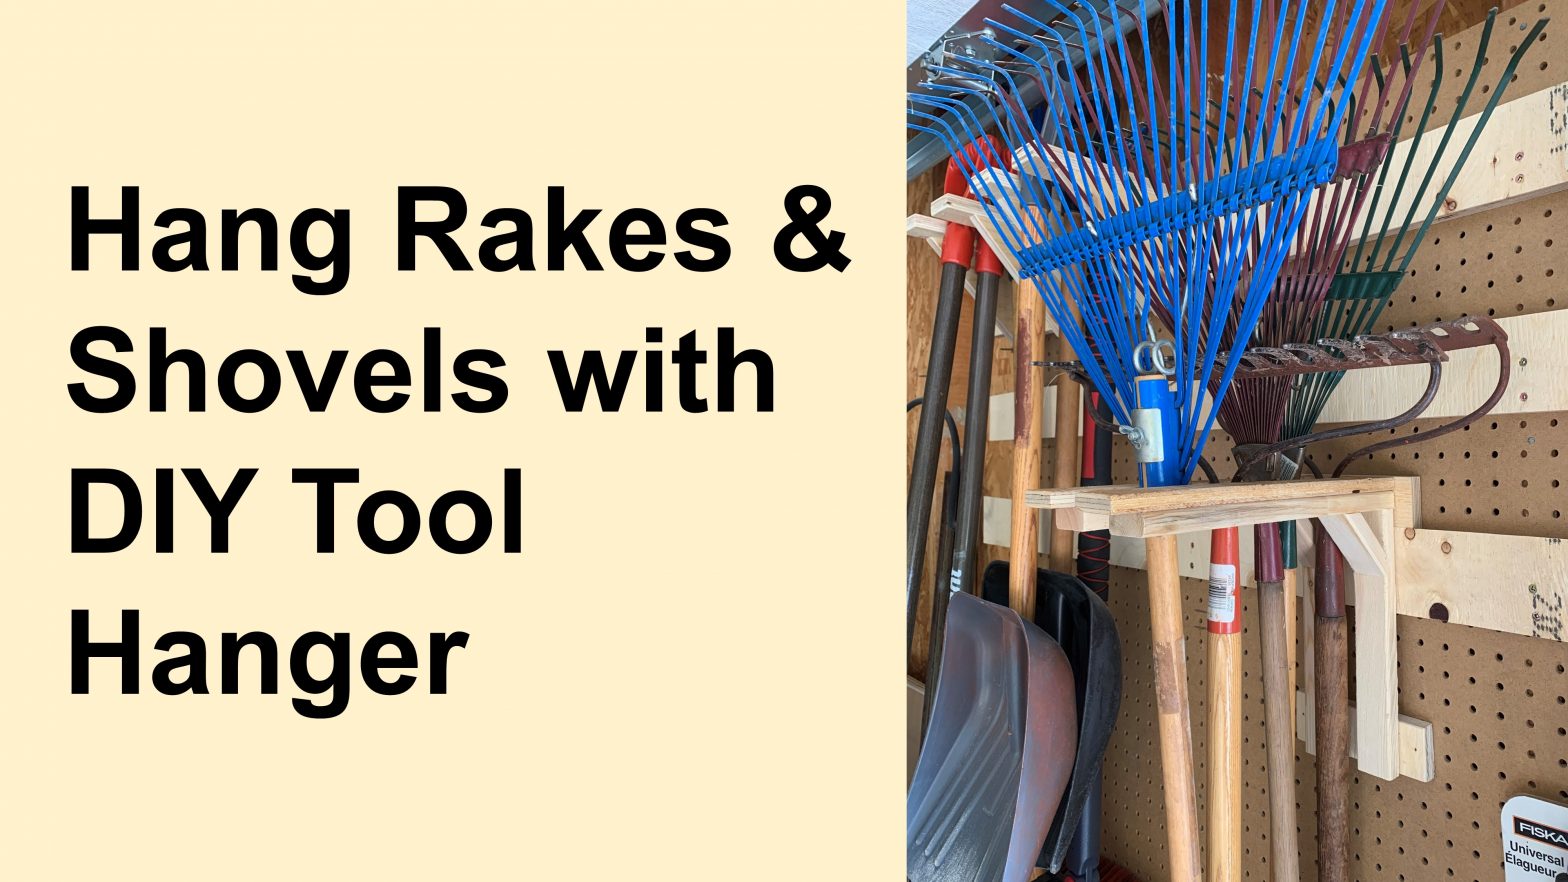 DIY Tool Hanger for Garage Storage: Rakes, Shovels & More; French Cleat/Drywall Walls